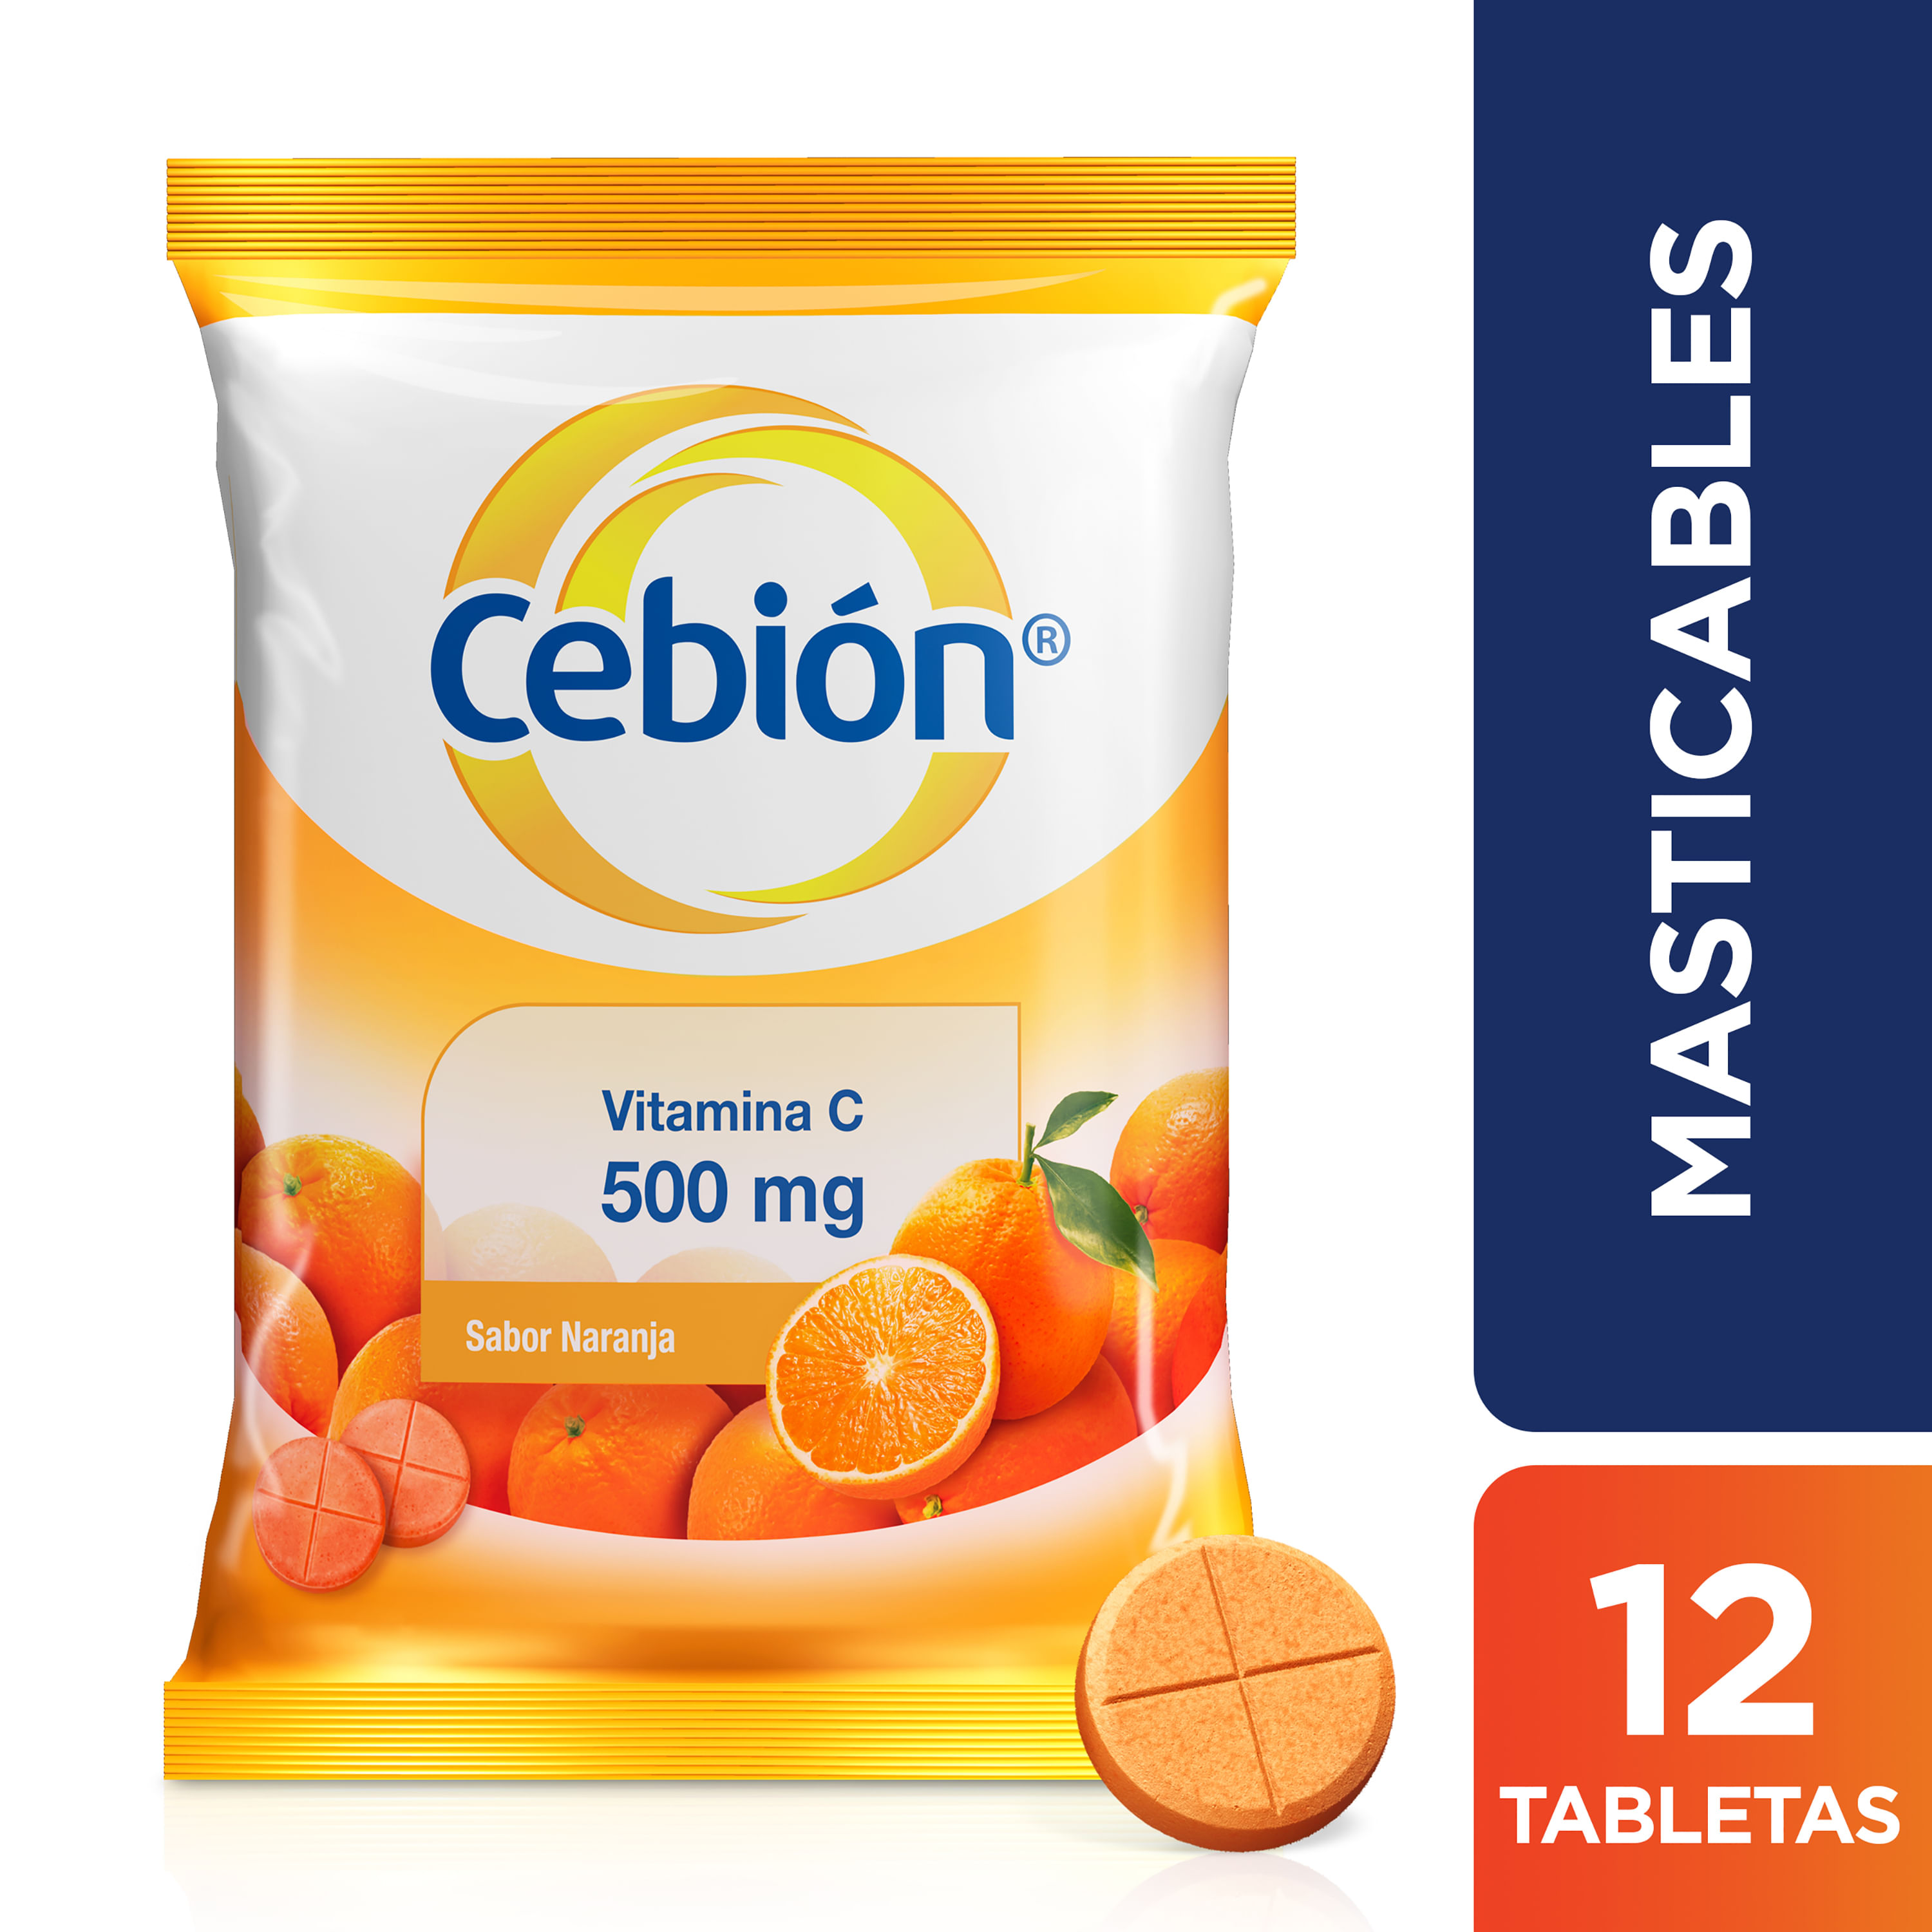 Tabletas-masticables-Cebi-n-de-Vitamina-C-sabor-a-Naranja-por-12-unidades-1-10527